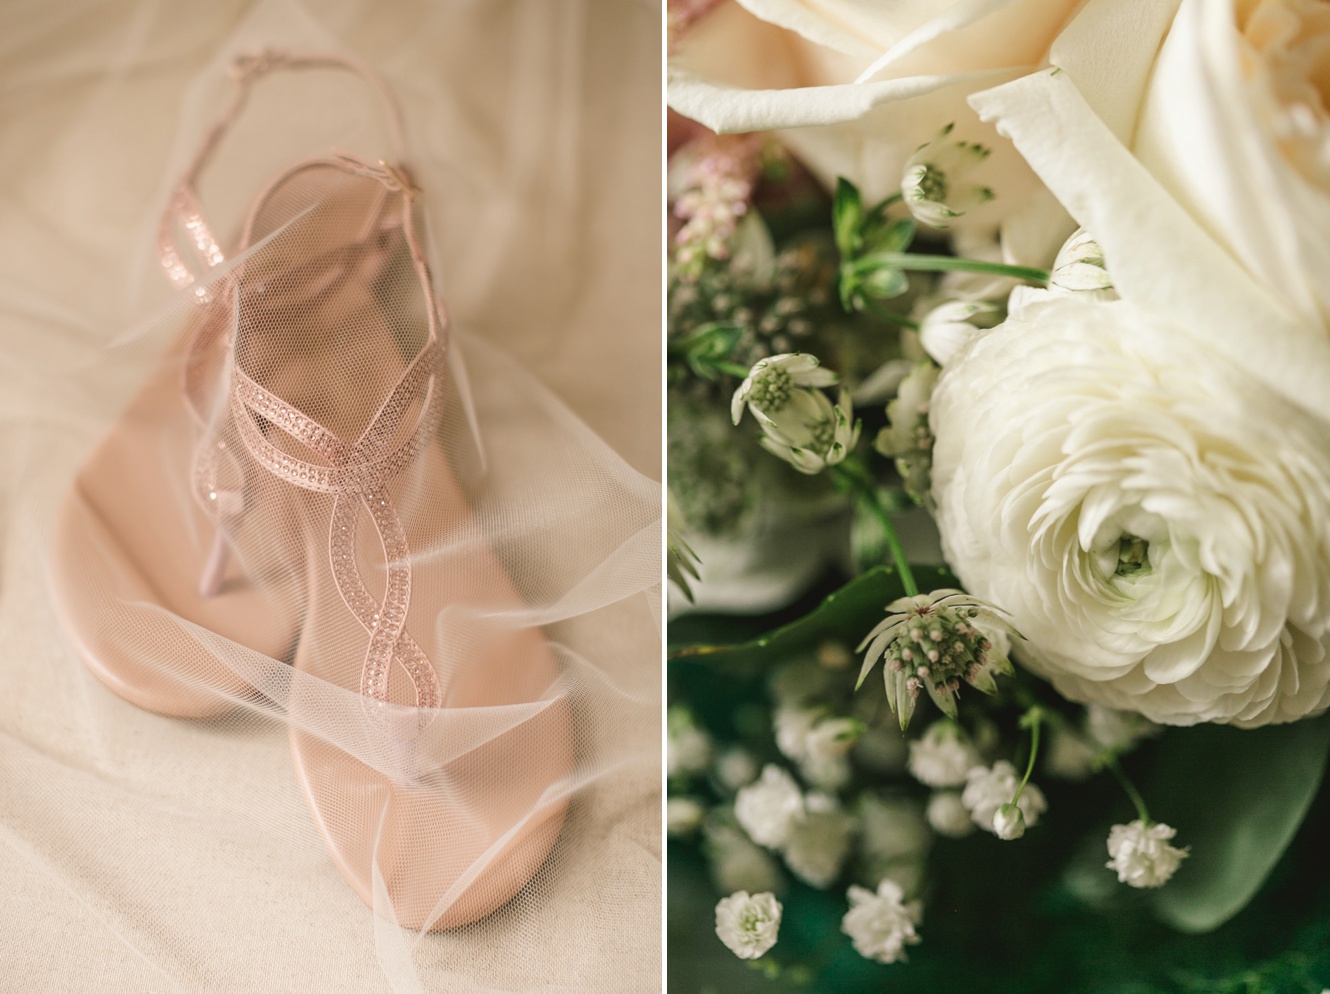 Wascana Flower Shop and Brides shoes photo